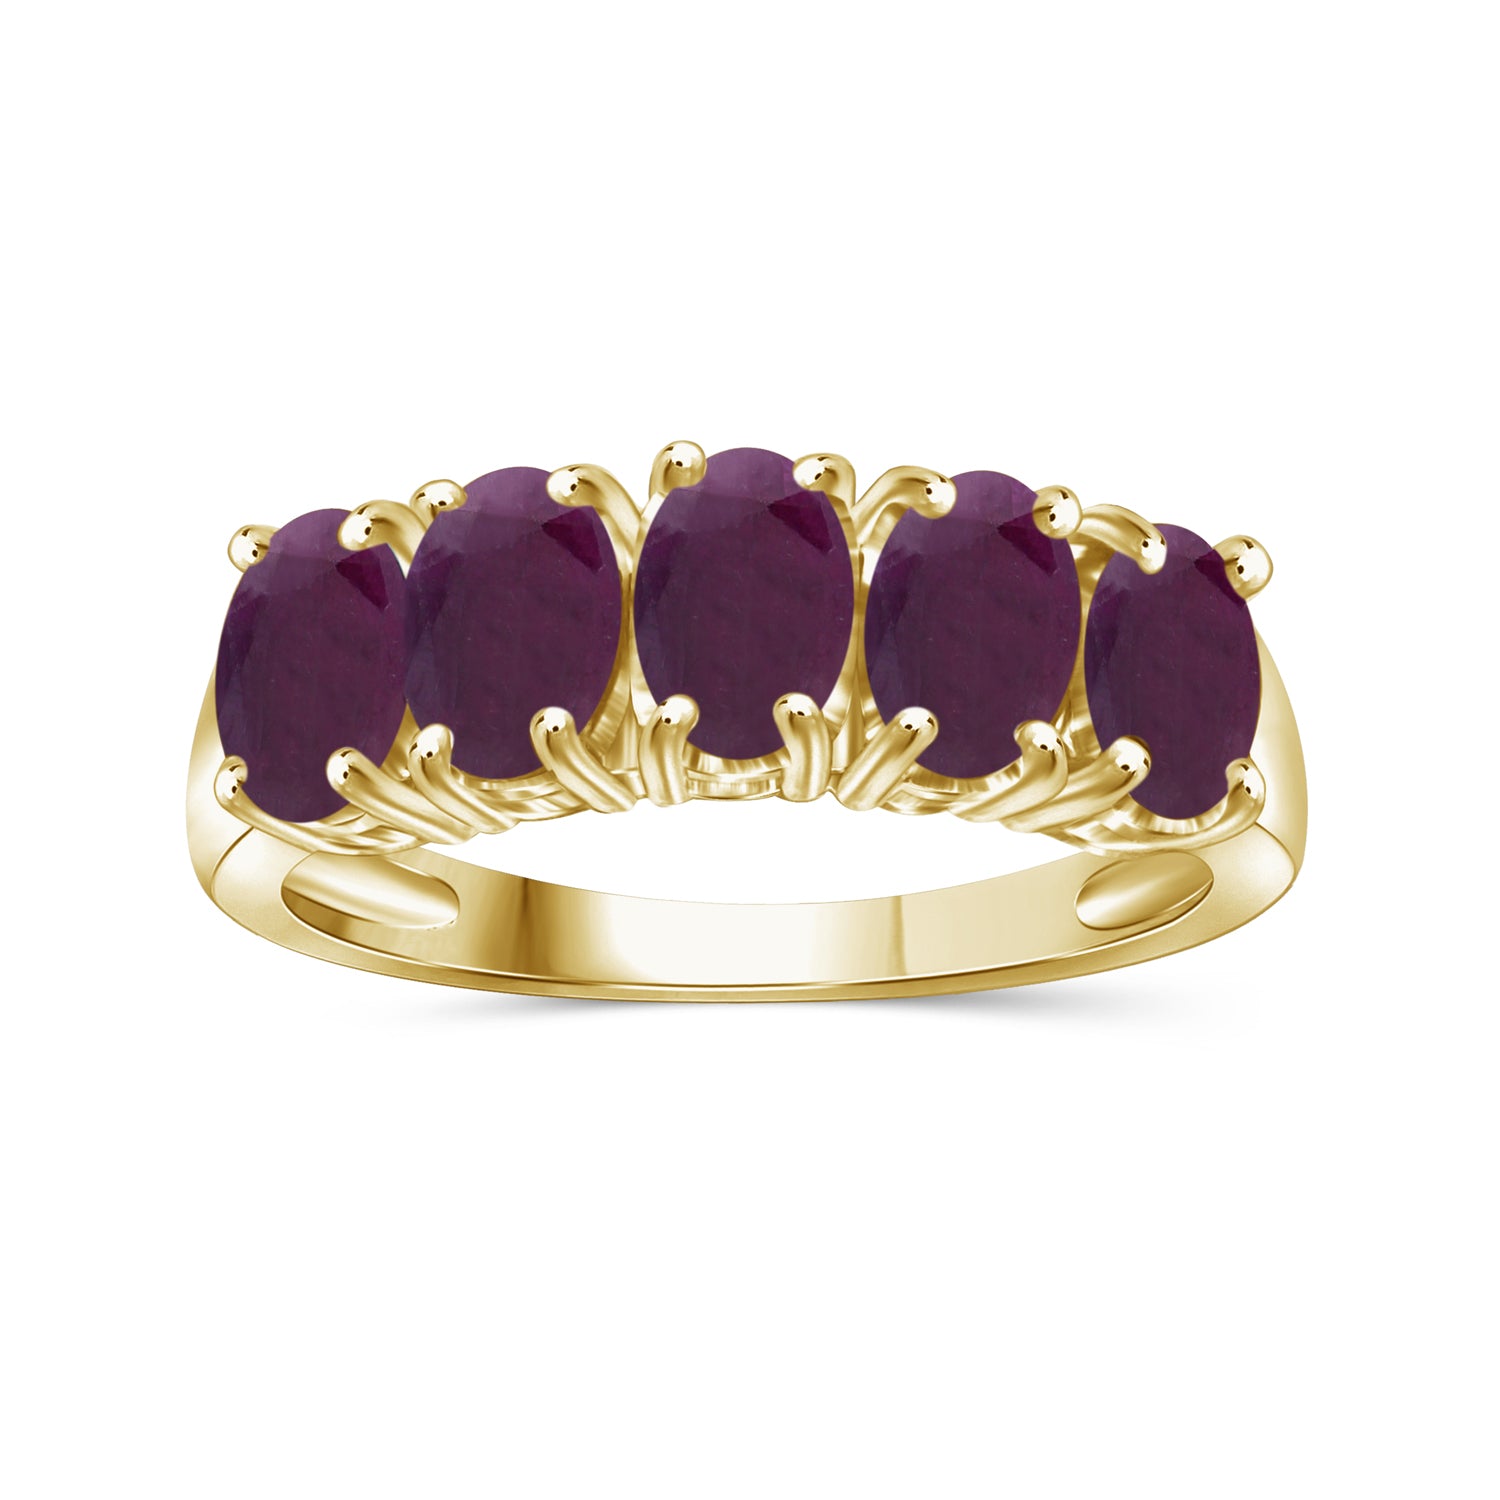 2.40 Carat T.G.W. Ruby Gemstone 14K Gold-Plated Ring